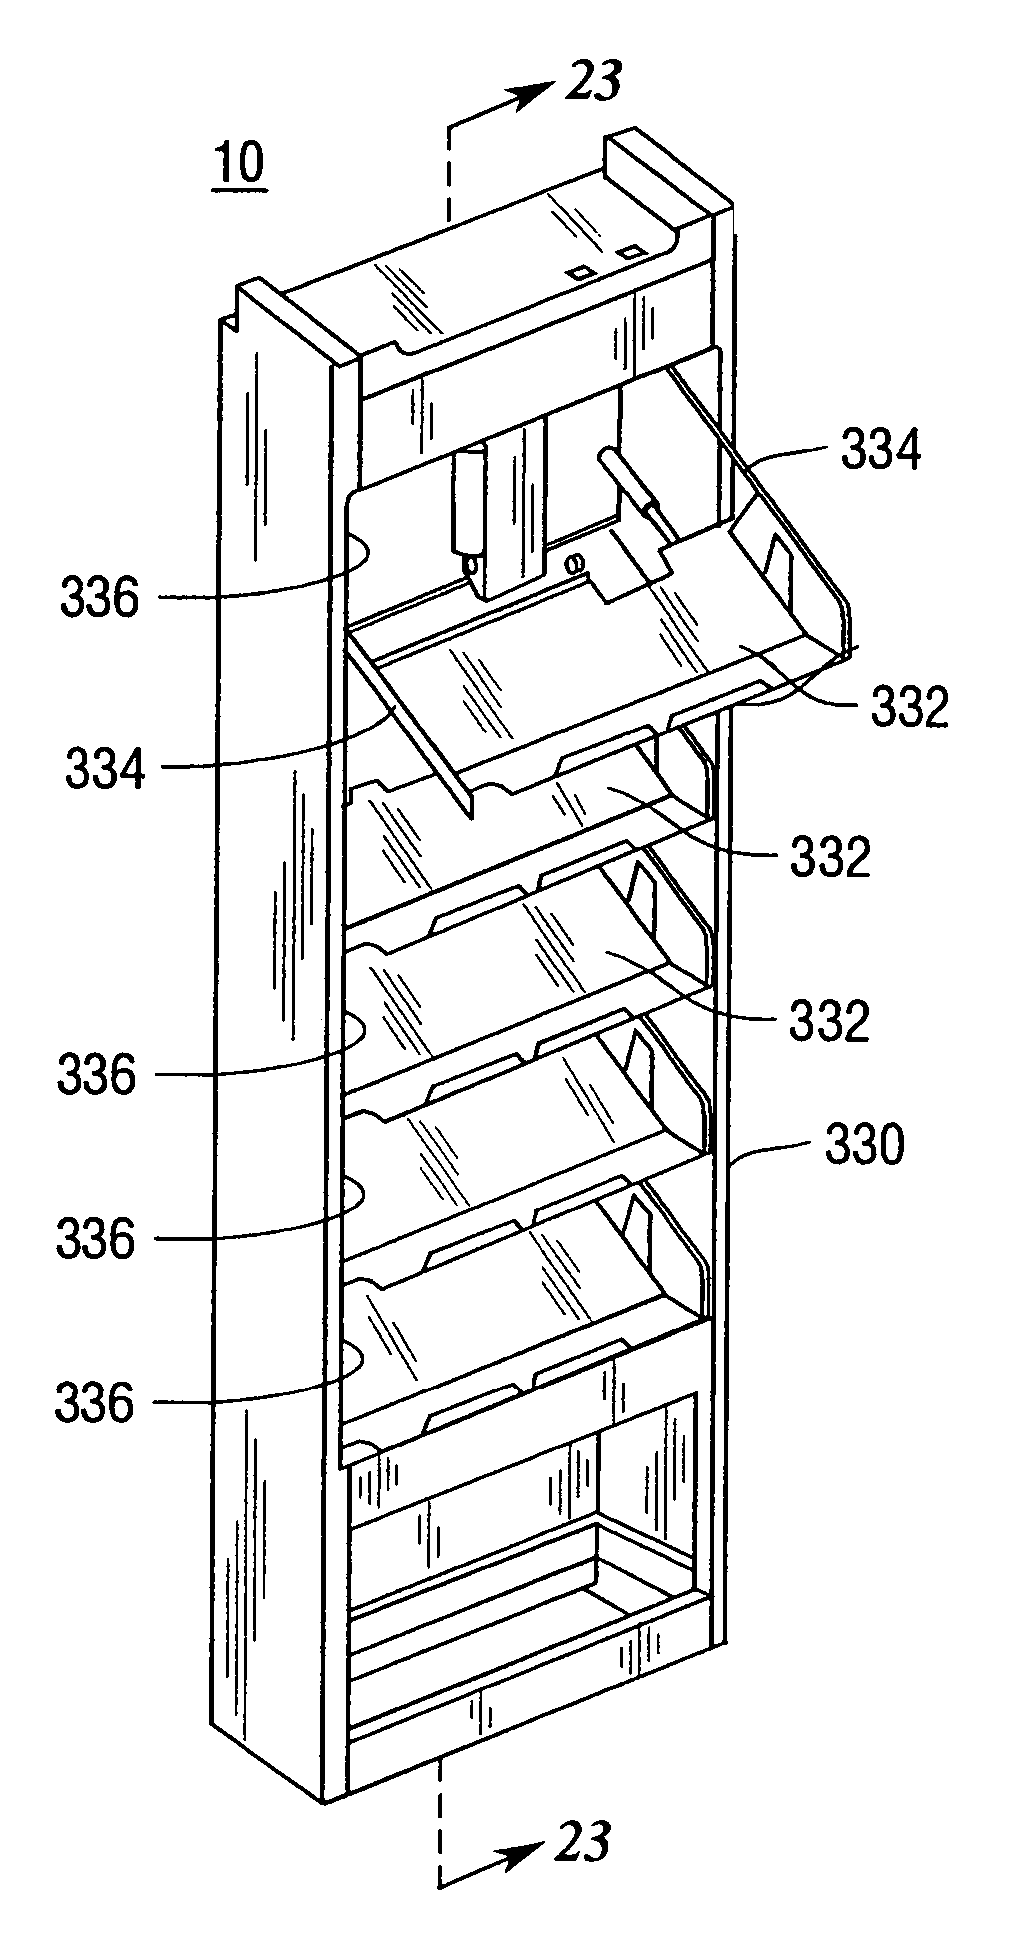 Drug dispensing cabinet having a drawer interlink, counterbalance and locking system